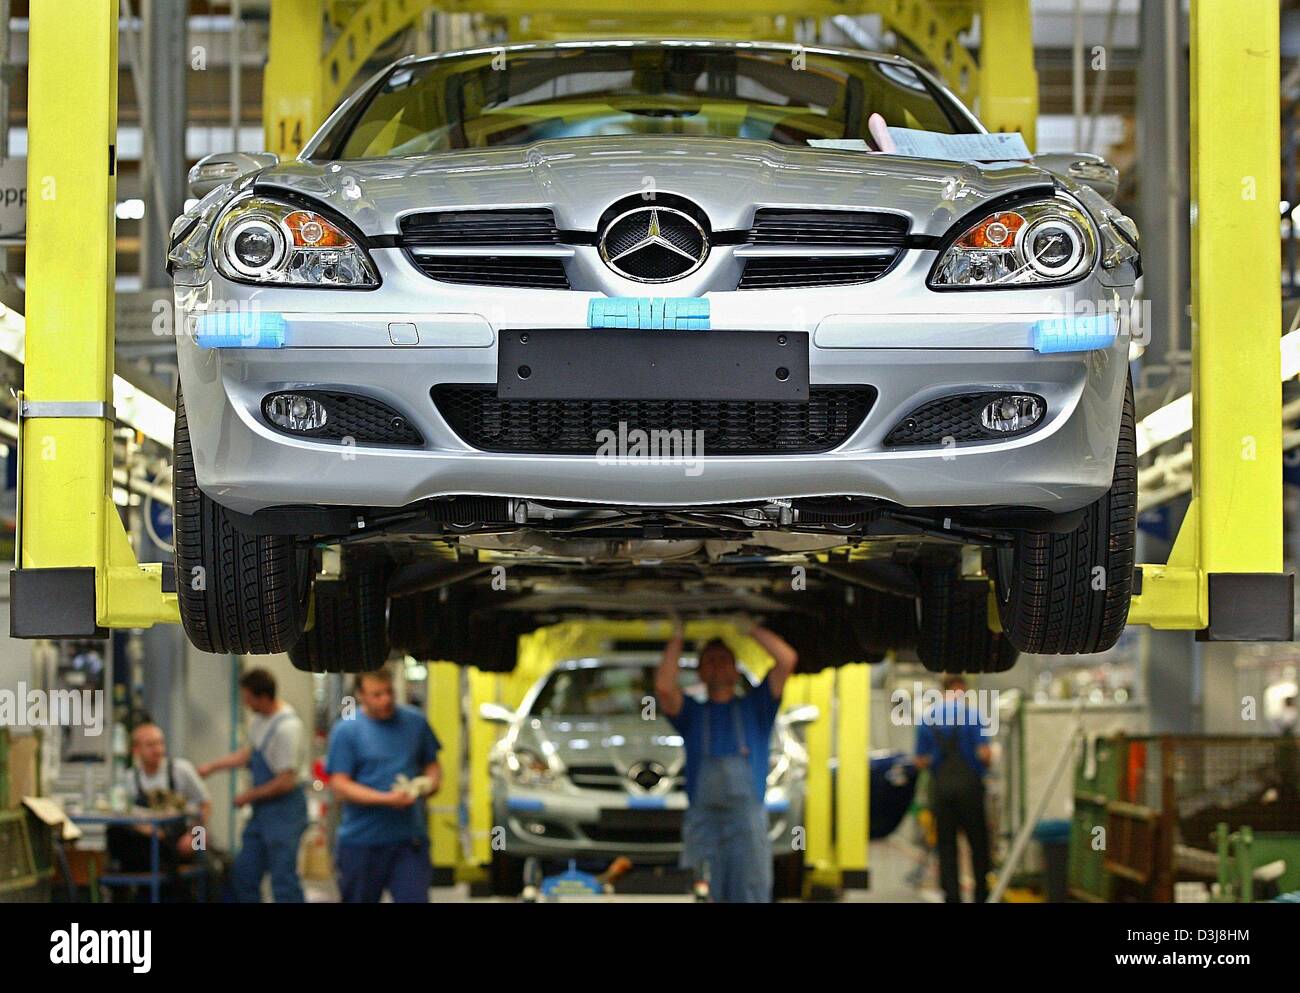 Mercedes slk roadster hi-res stock photography and images - Alamy